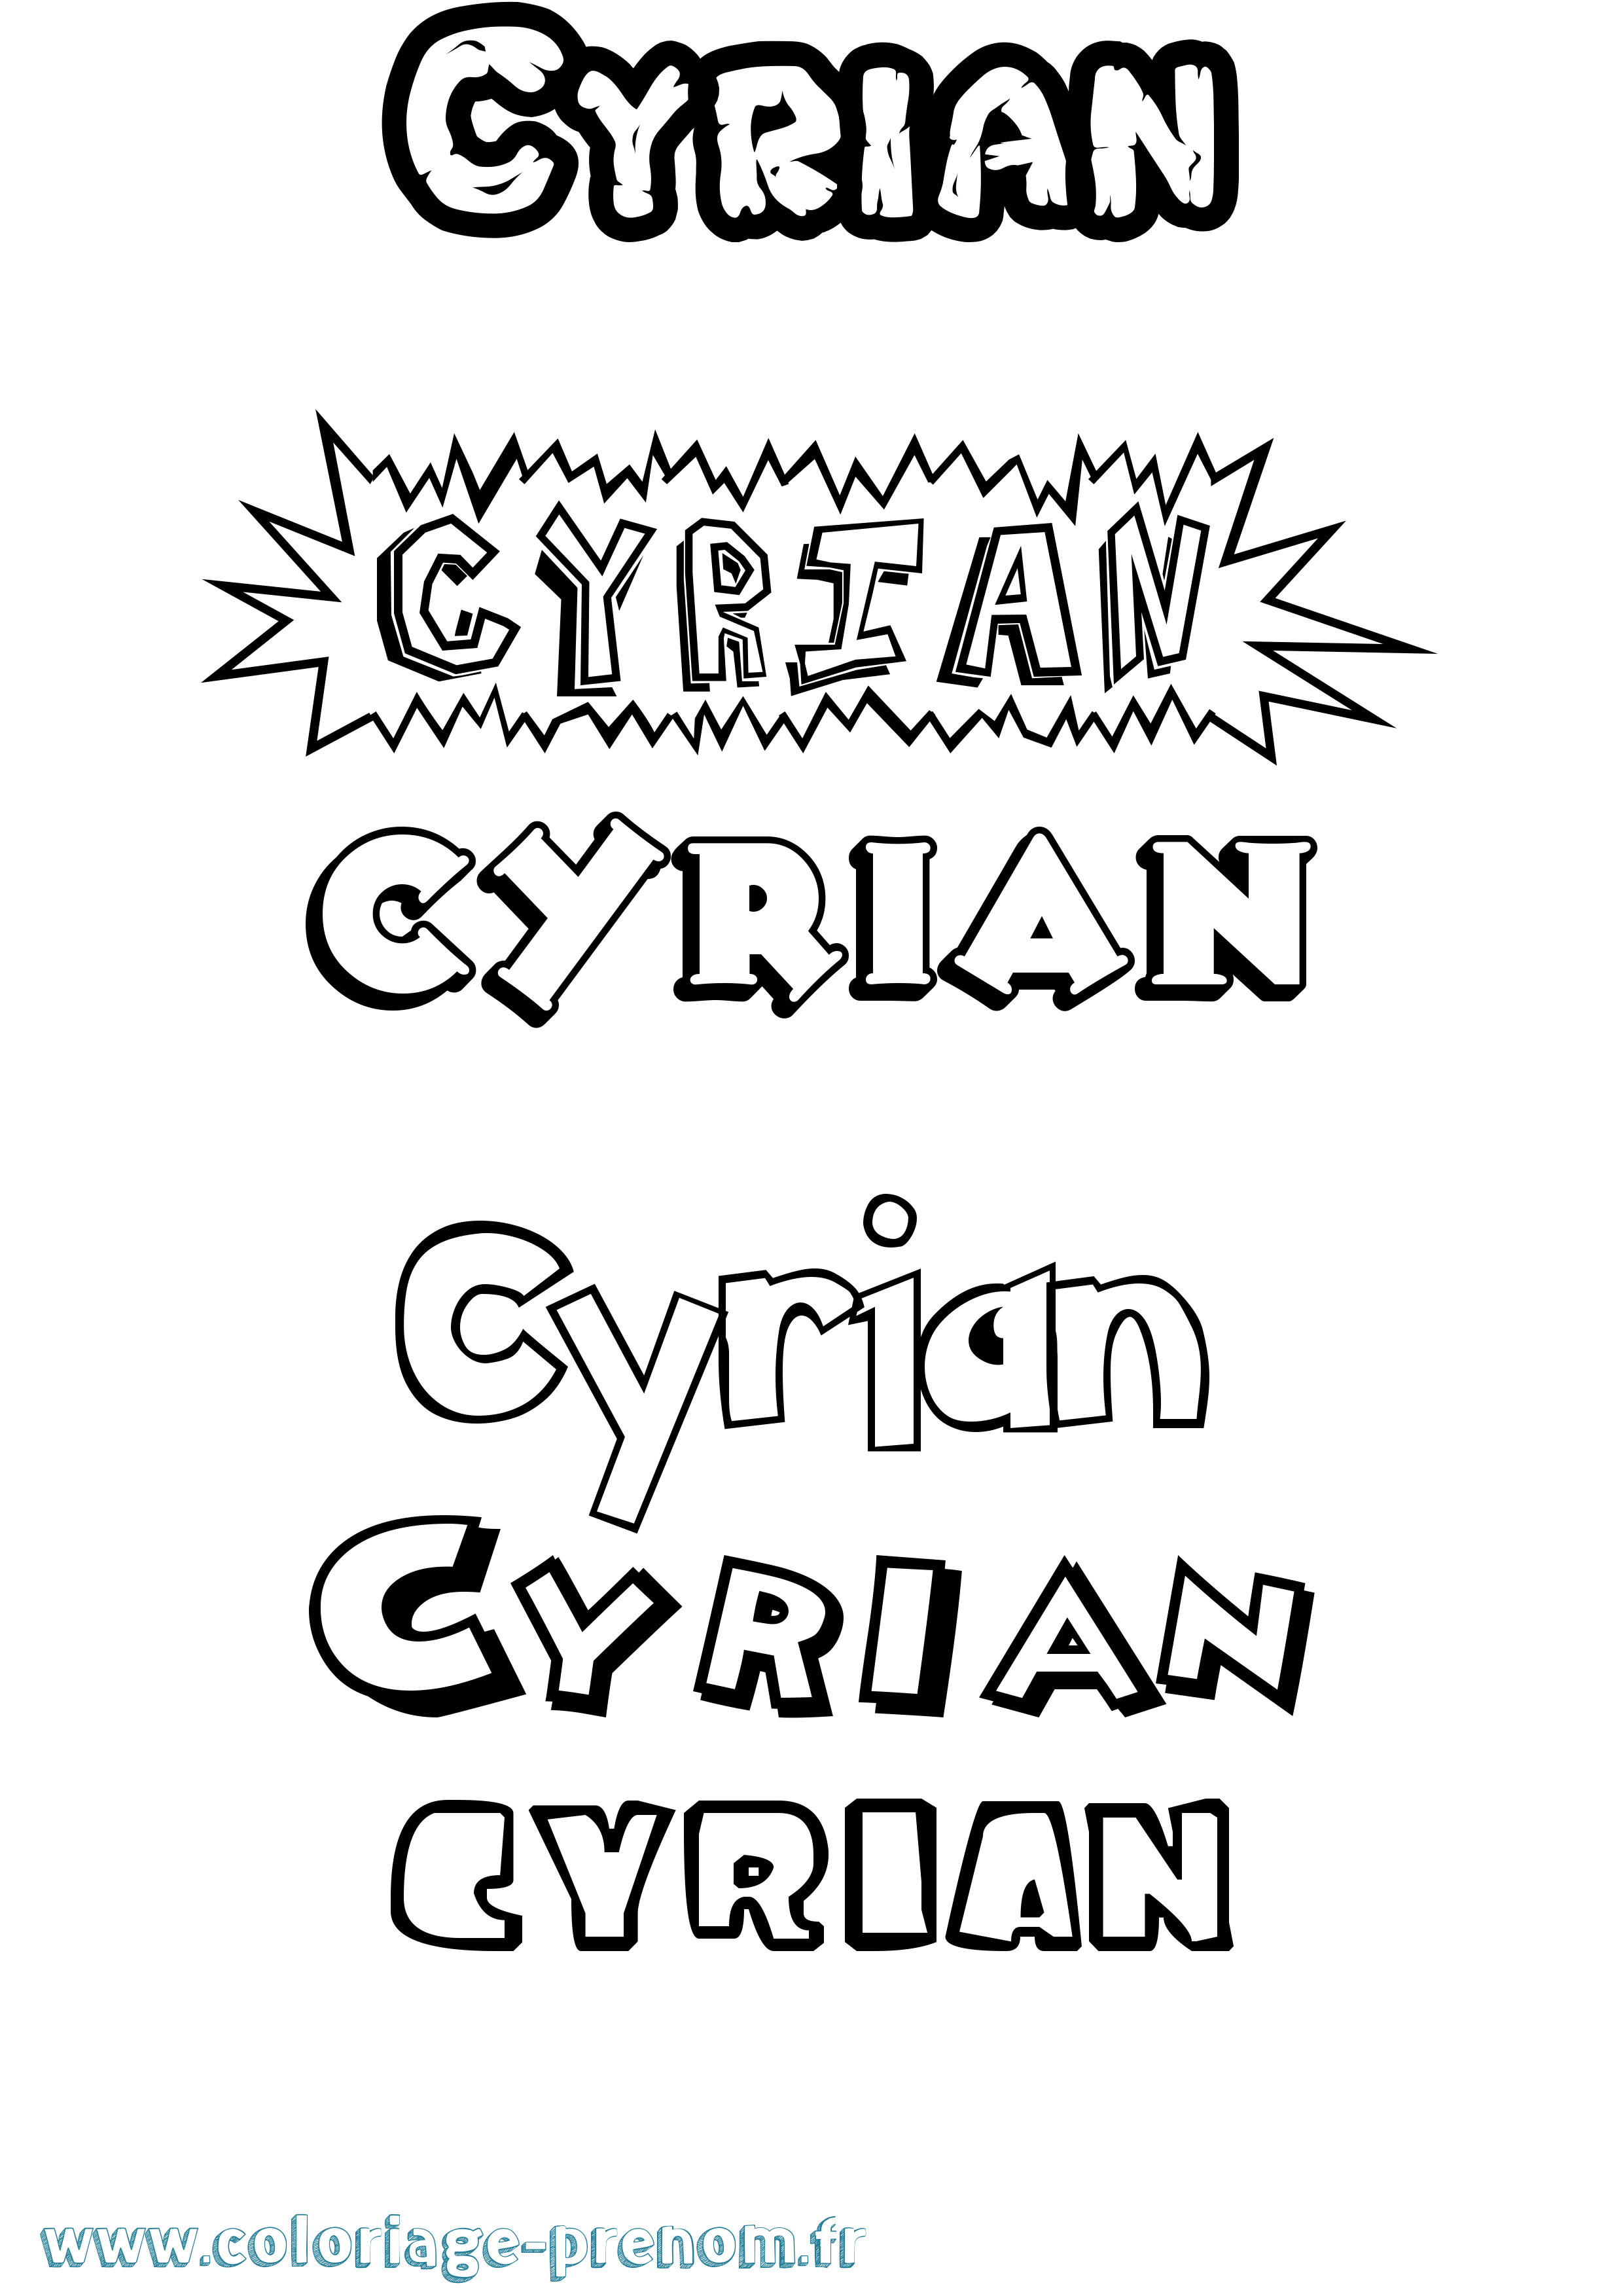 Coloriage prénom Cyrian